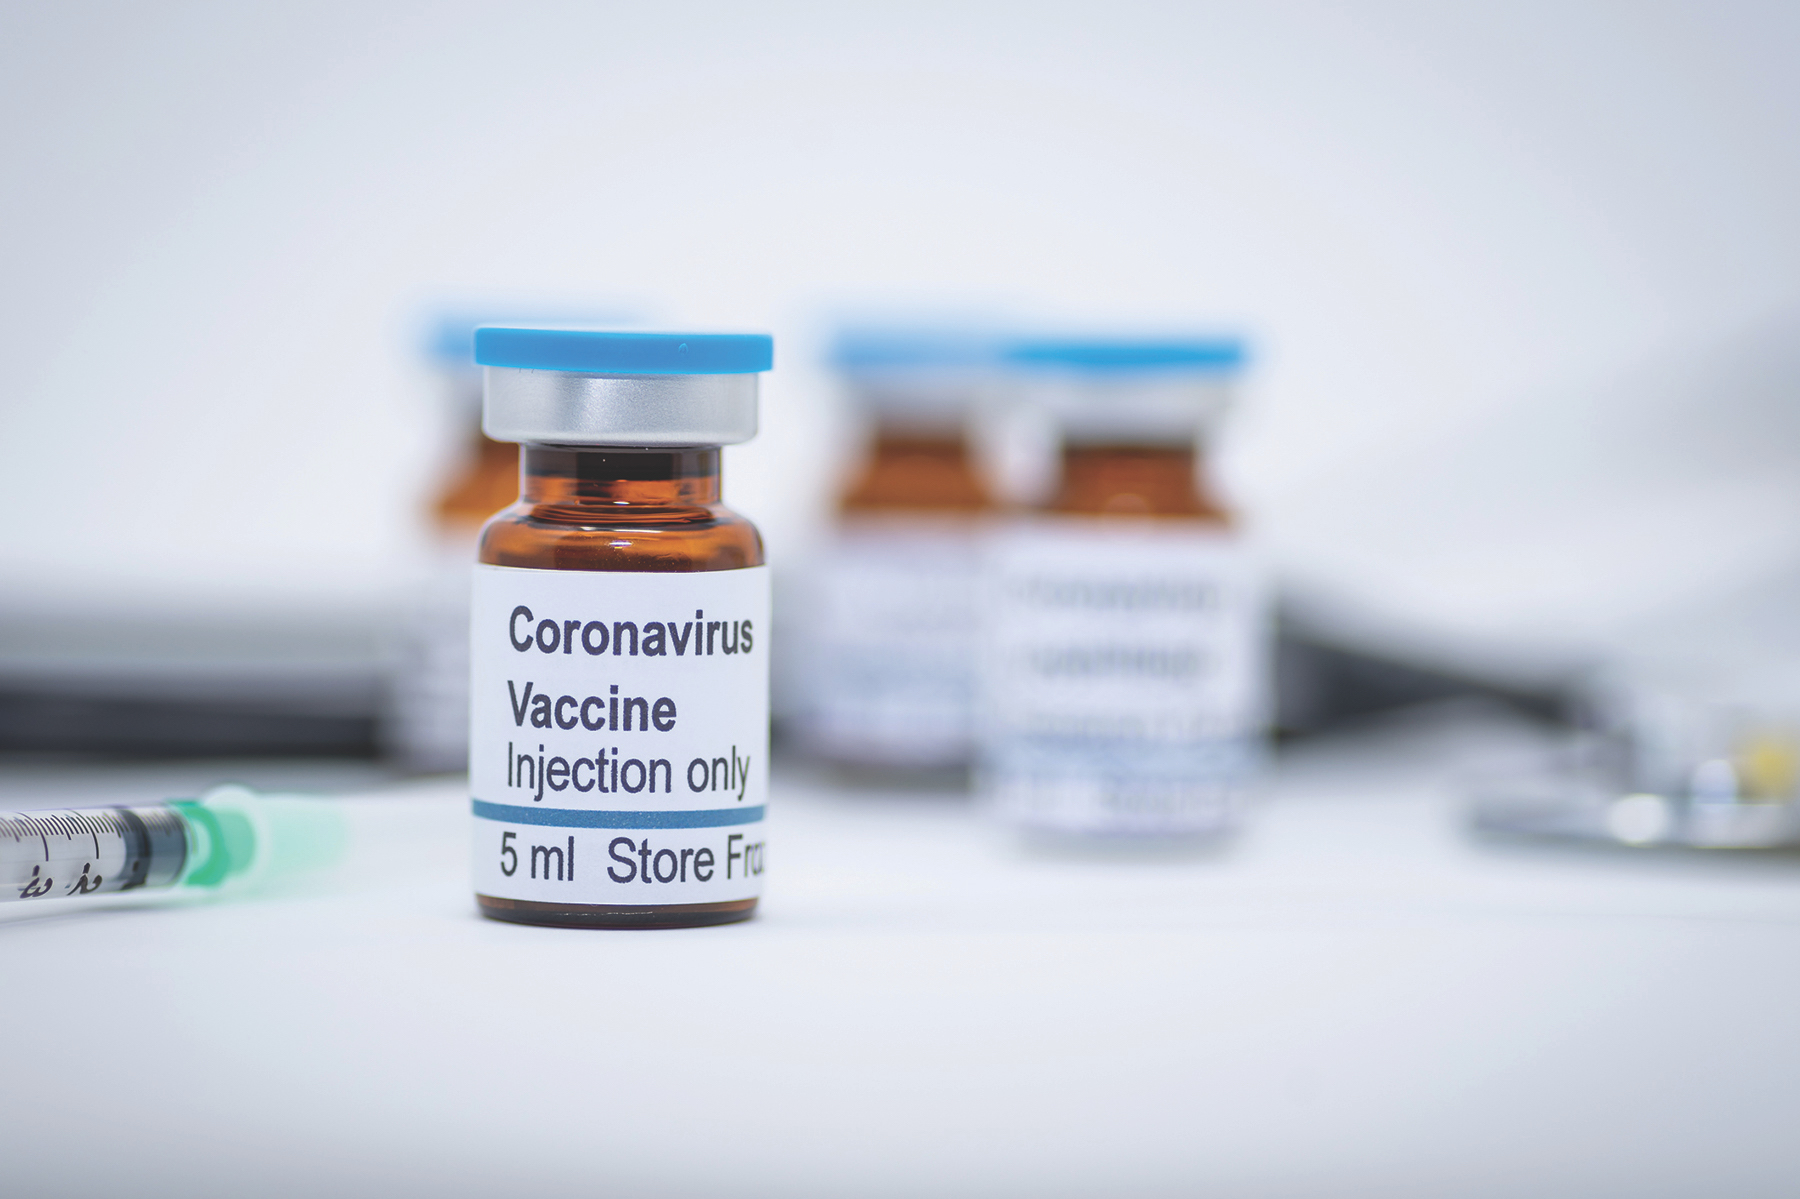 CureVac: Ξεκινάει την πρώτη φάση των δοκιμών εμβολίου για τον κορωνοϊό σε ανθρώπους